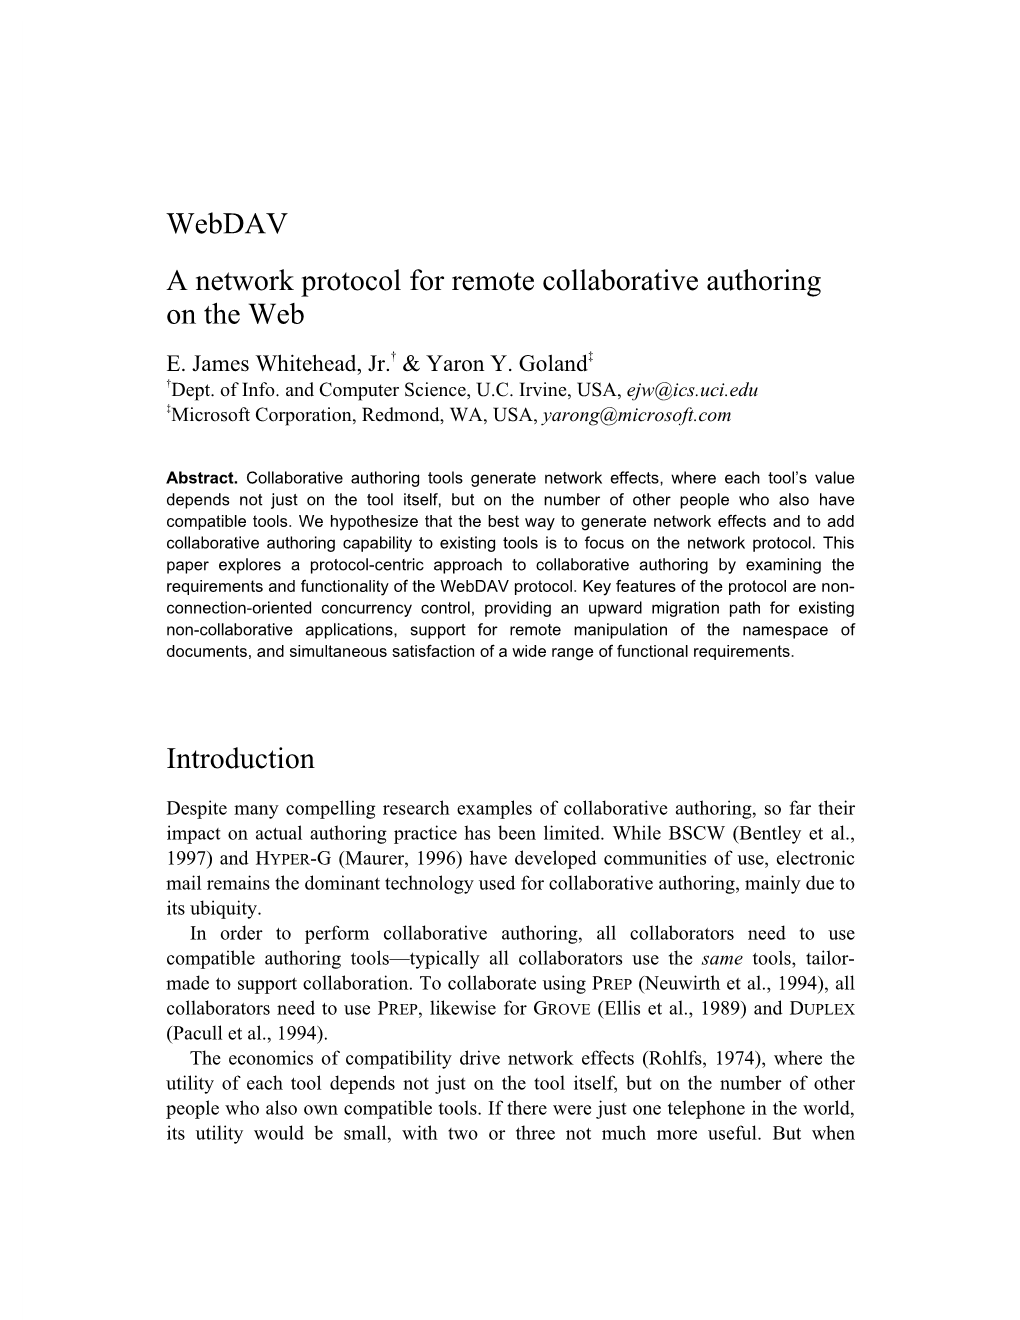 Webdav a Network Protocol for Remote Collaborative Authoring on the Web E